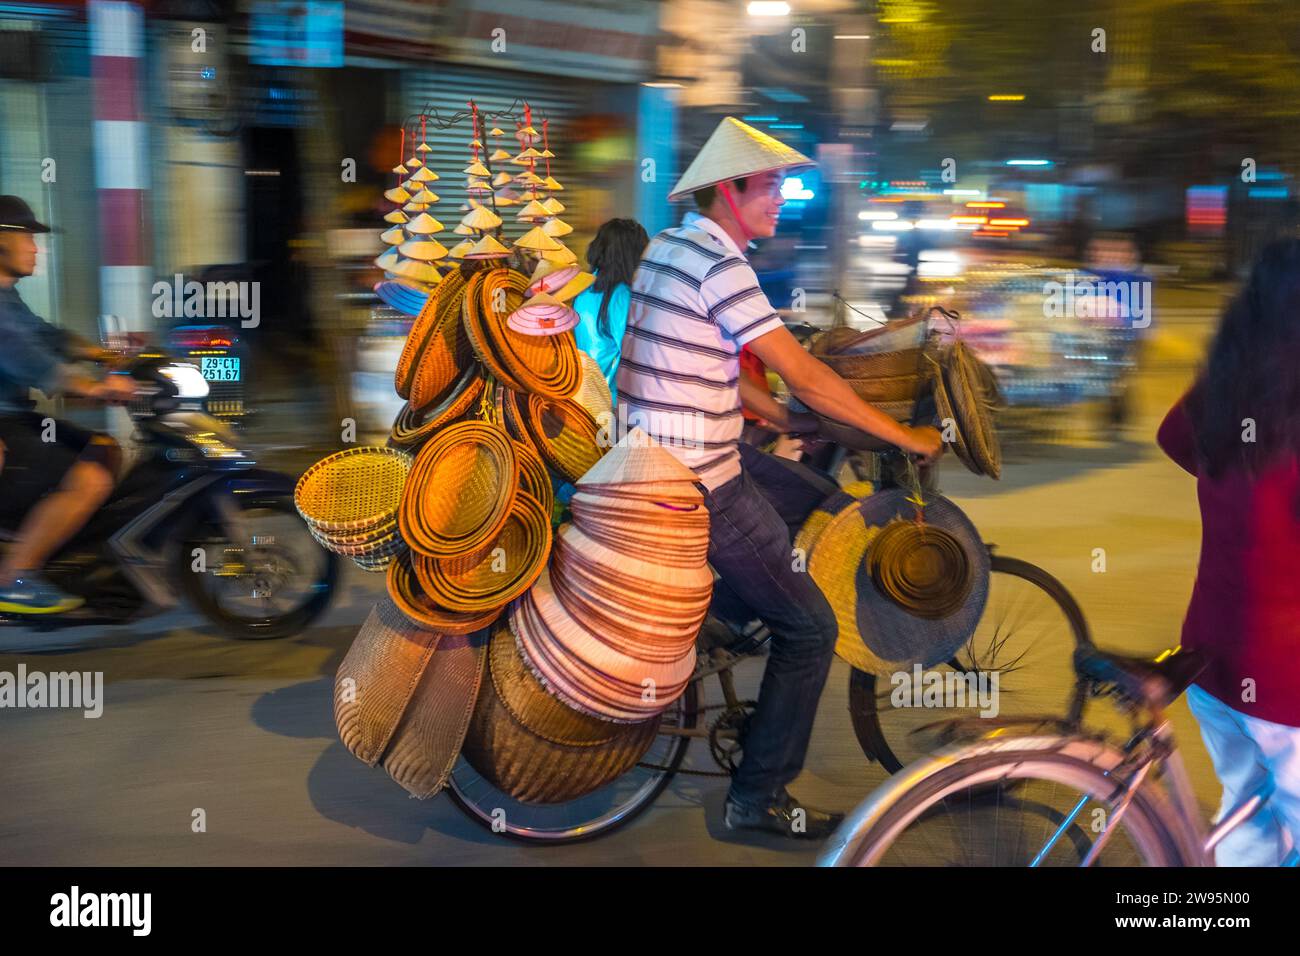 Basket & hat seller on bicycle in busy street, Hanoi, Vietnam Stock Photo